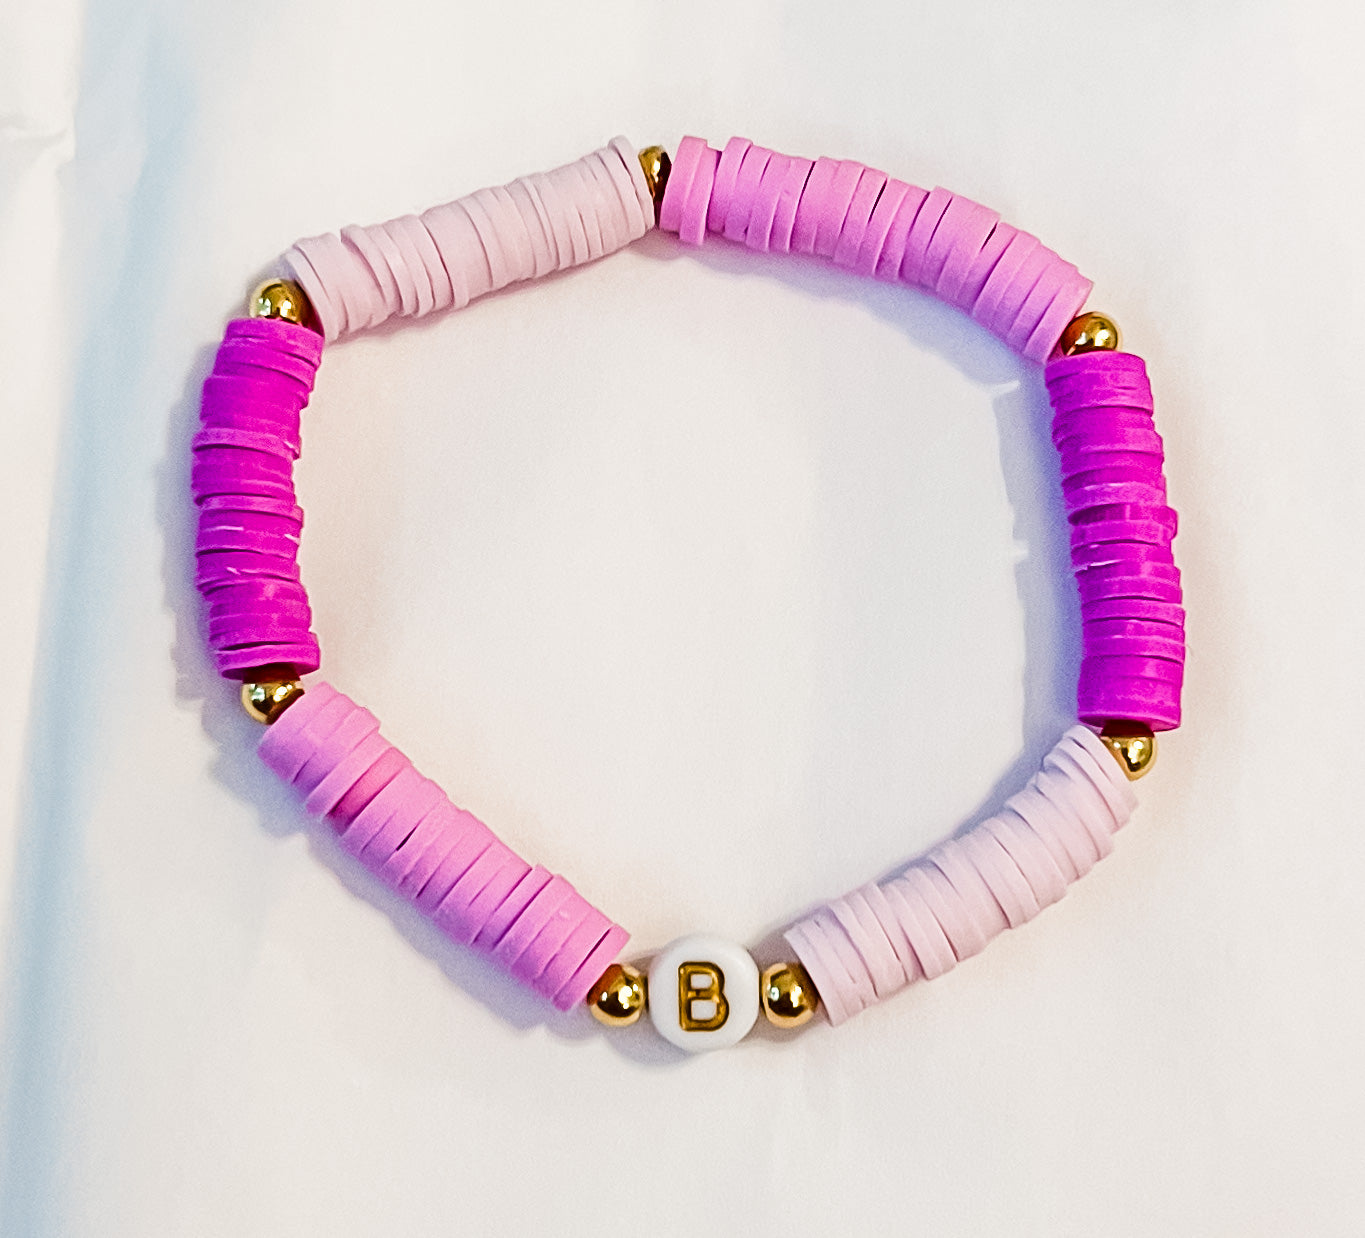 OCARDI 7000+ Pcs Bracelet Making Kit - 28 Colors Clay Beads for Bracelet  Making-Friendship Bracelet Kit with Gift Pack - Bracelet Making Kit for